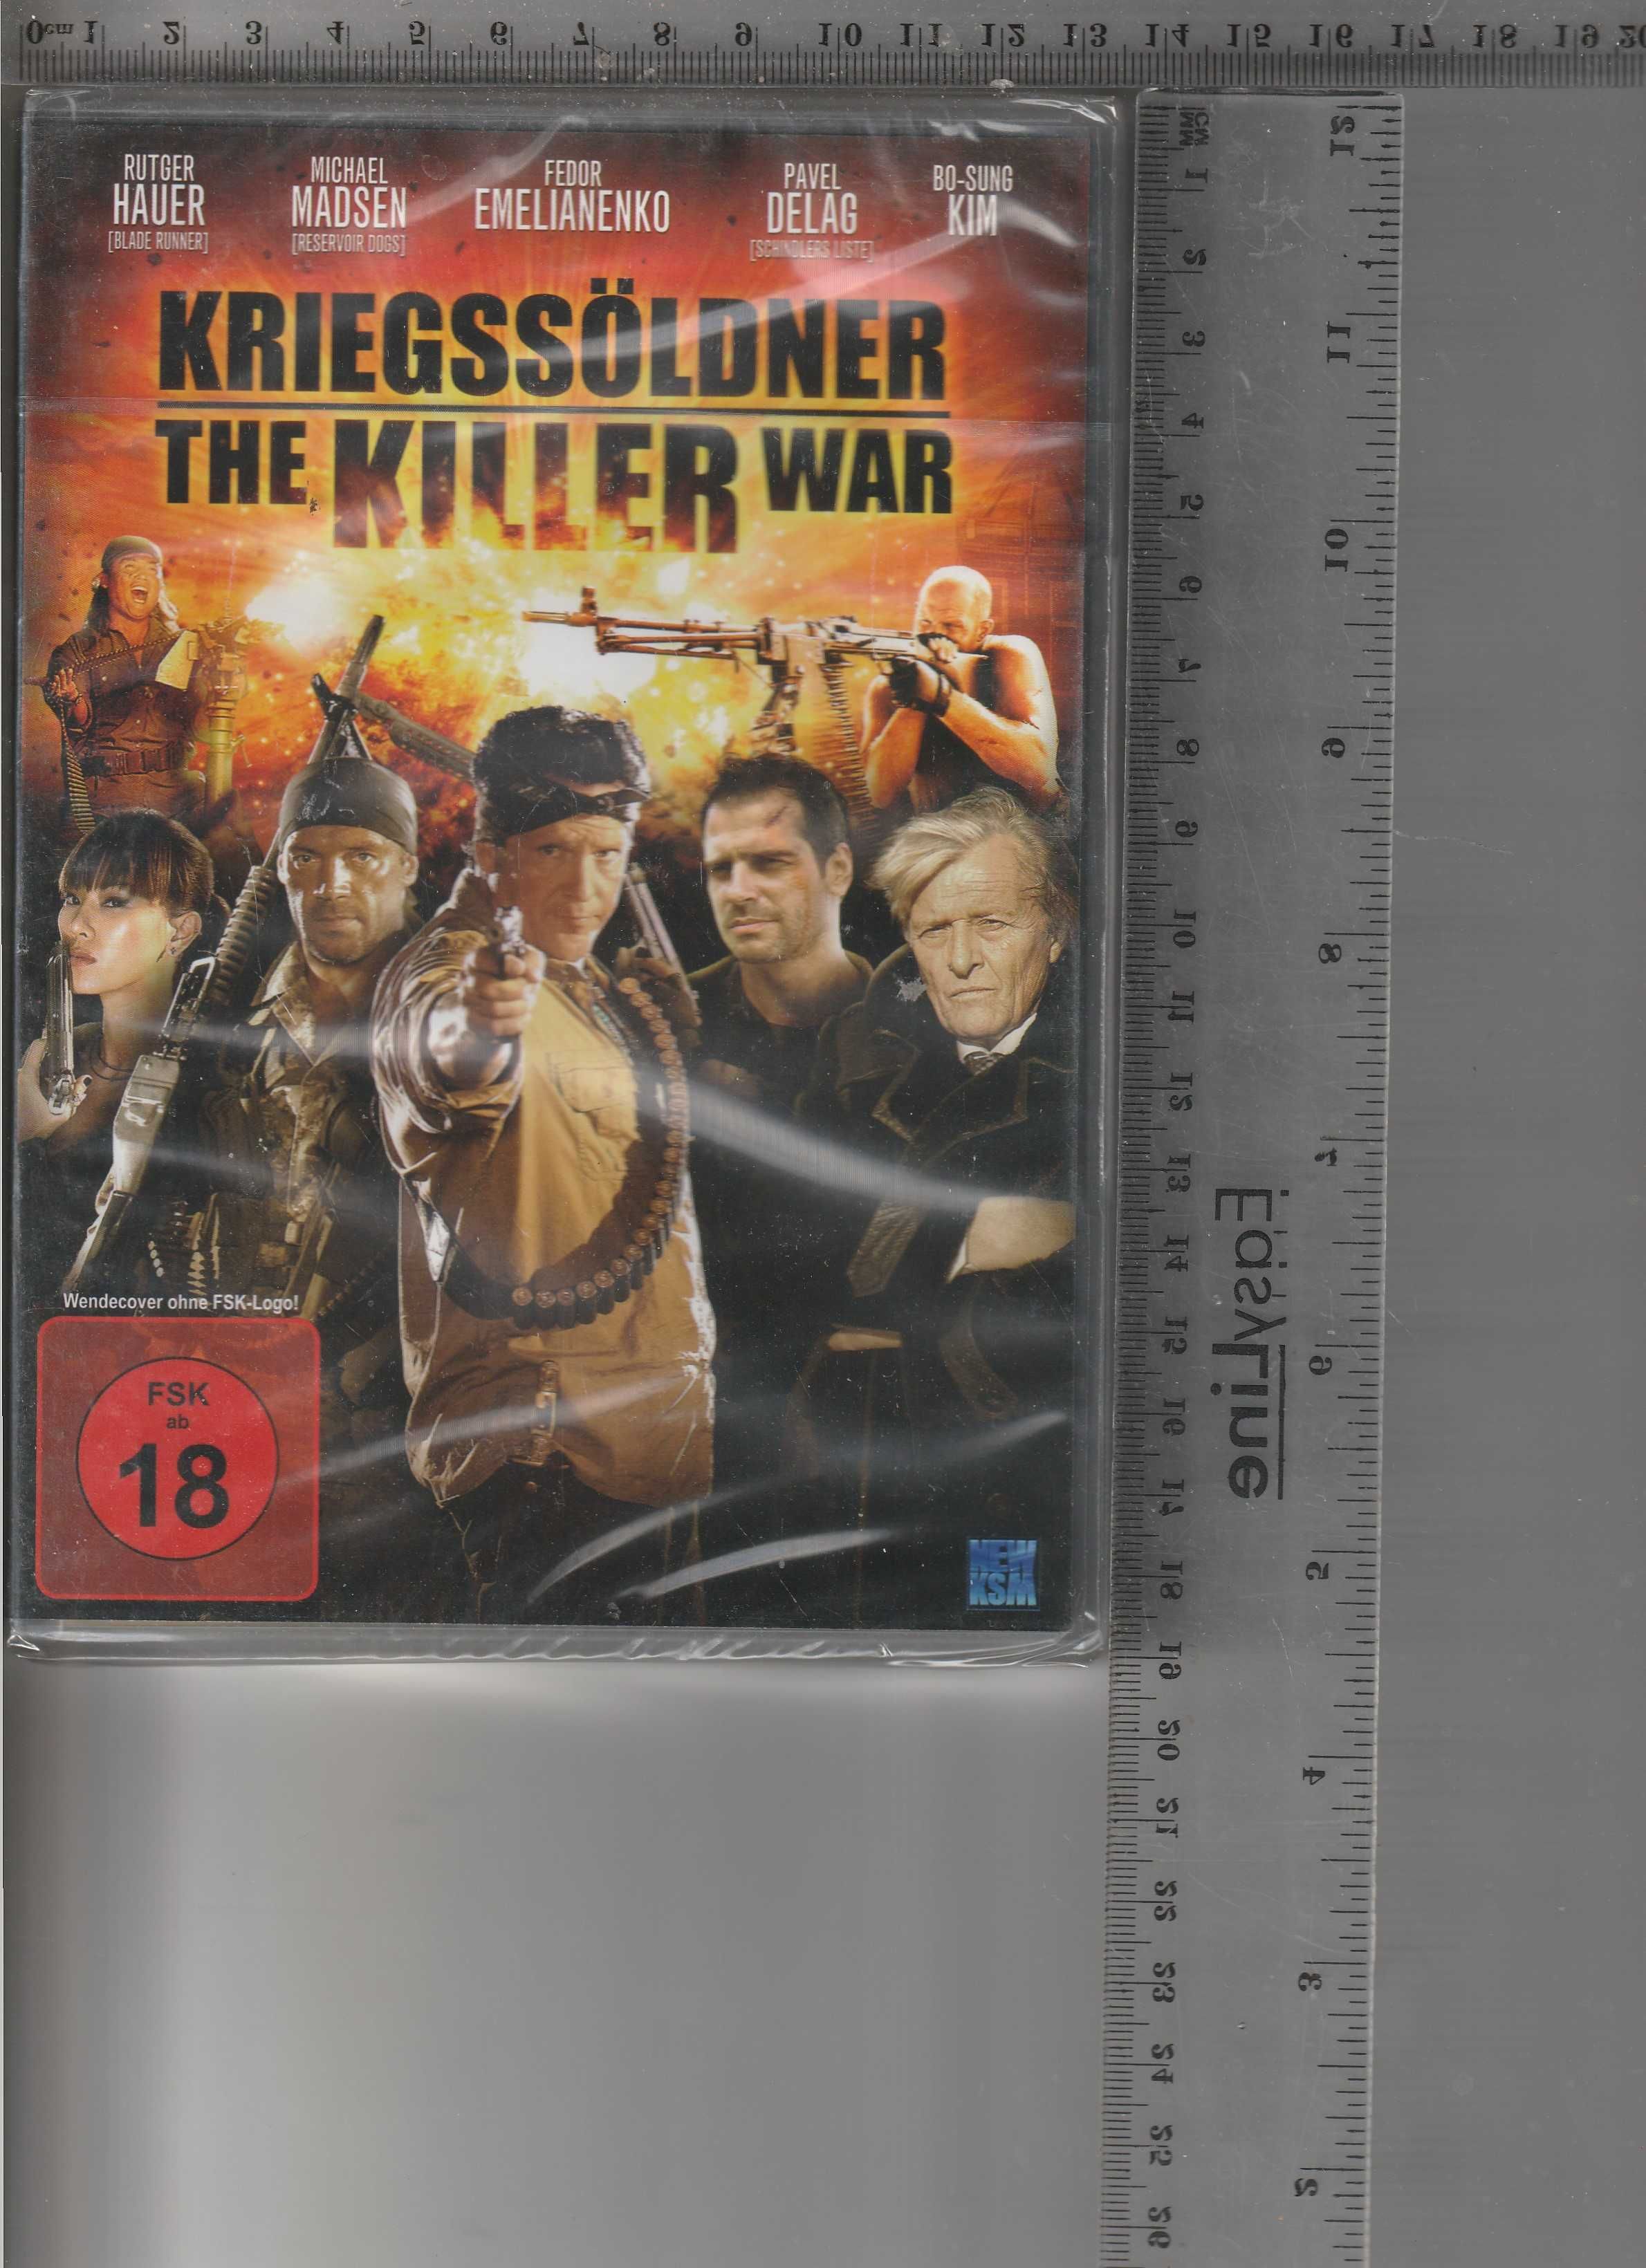 Kriegssoldner the killer war DVD